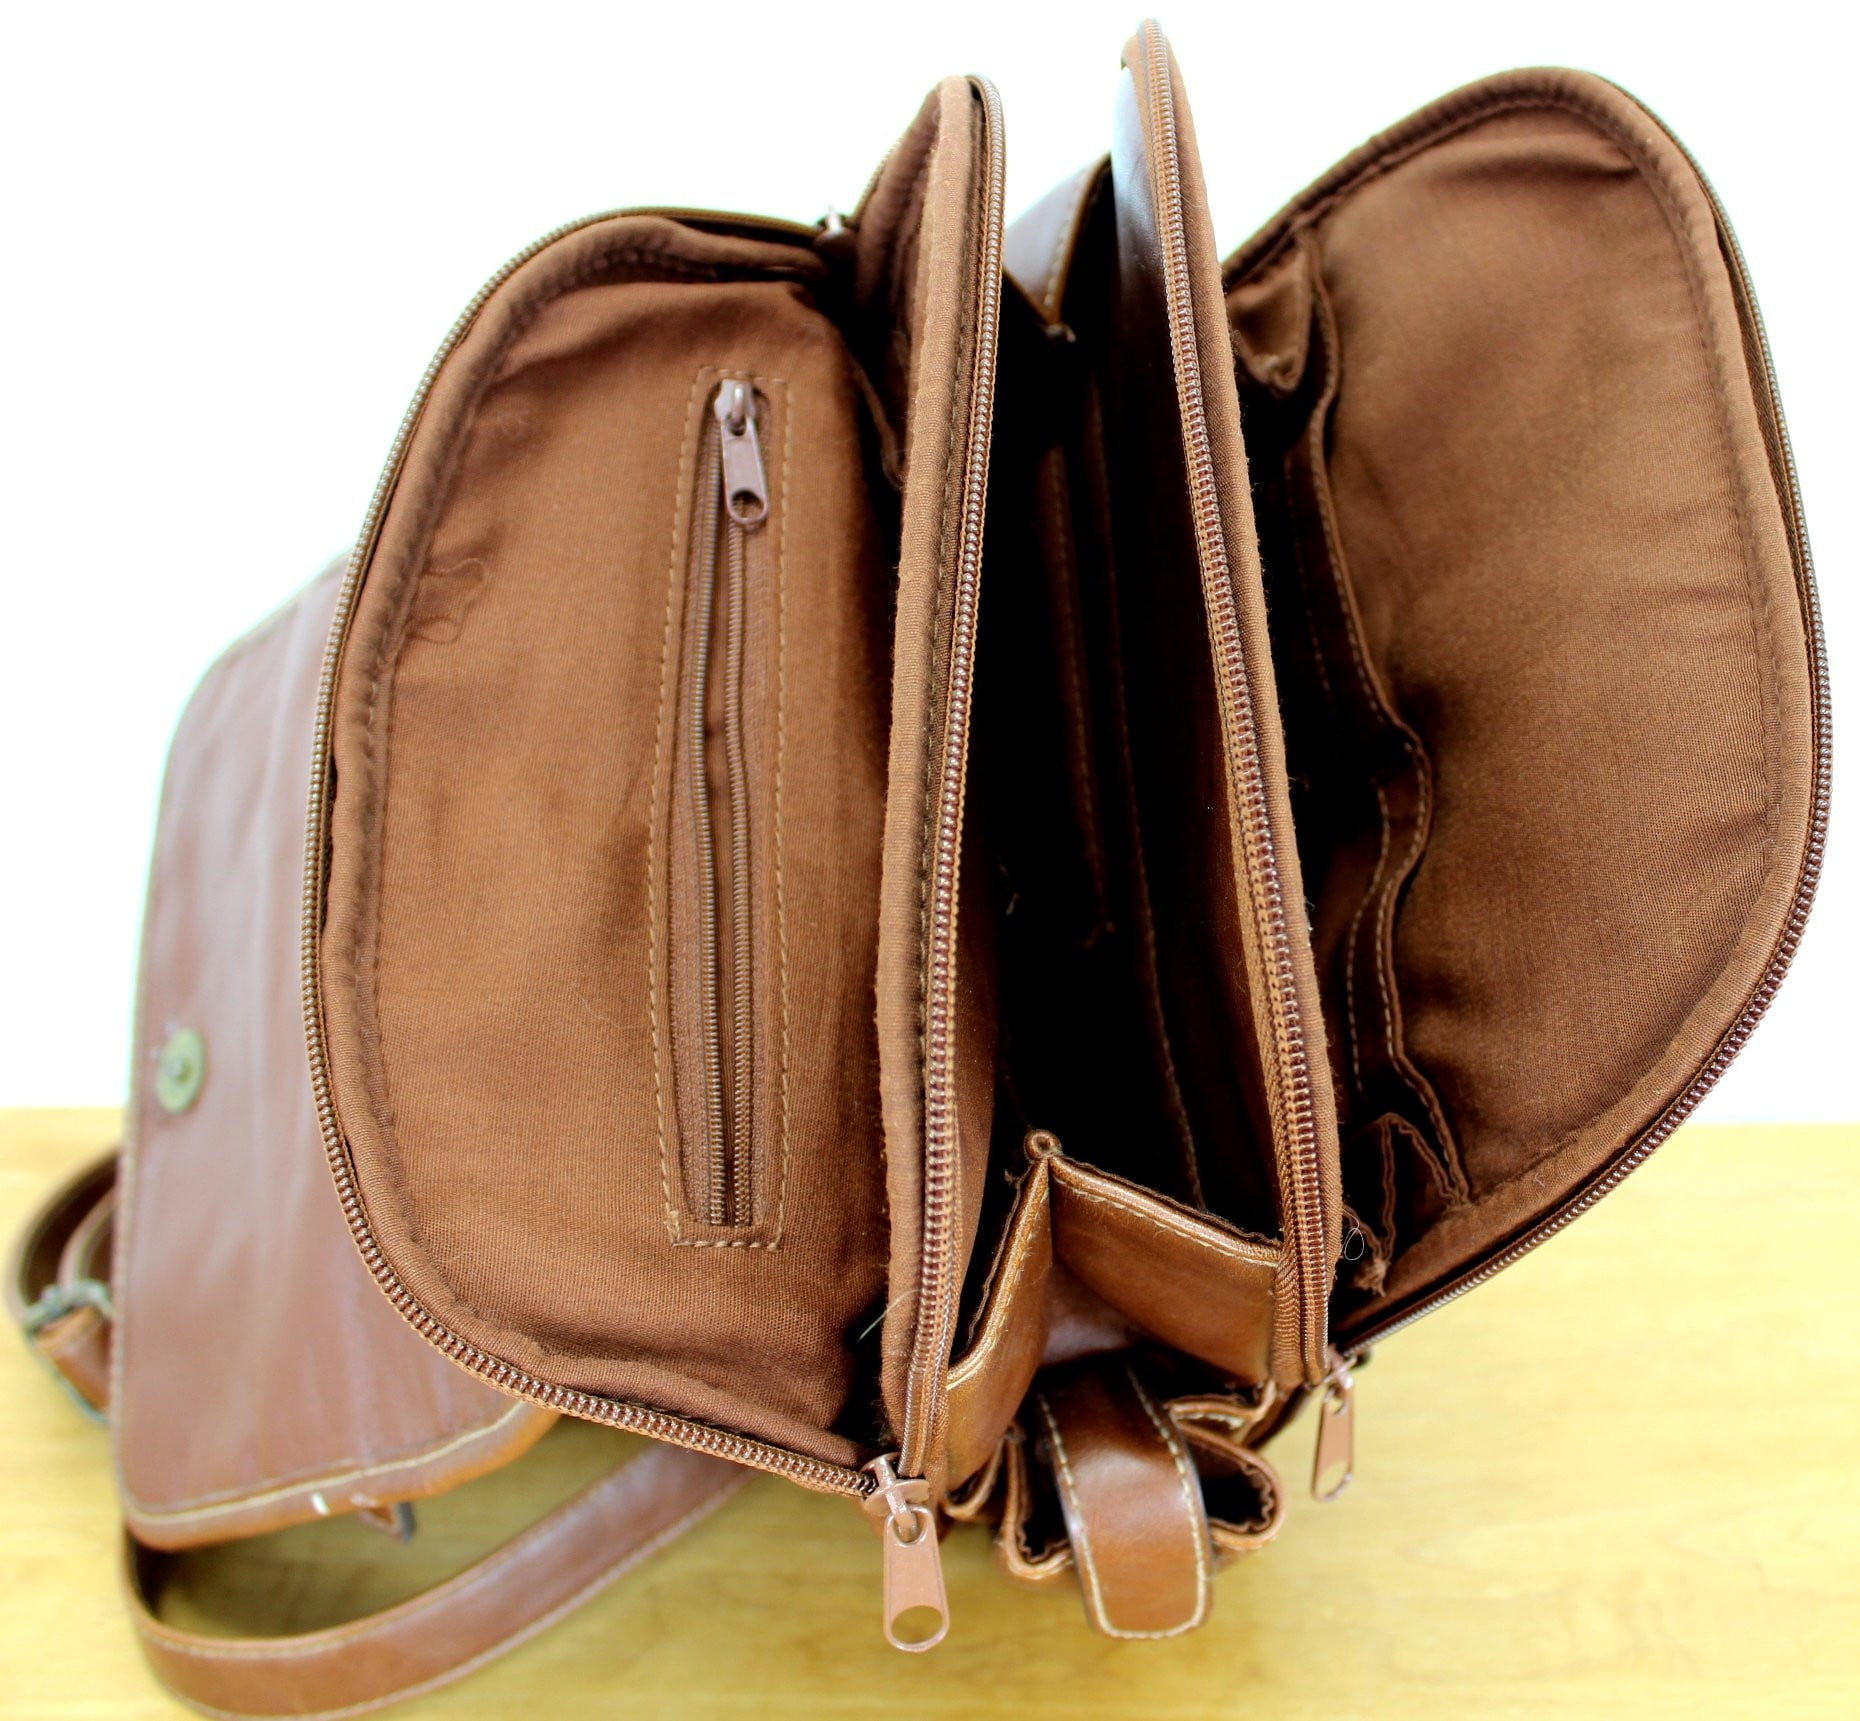 Rosetti purse | Purses, Hobo style, Handbags affordable